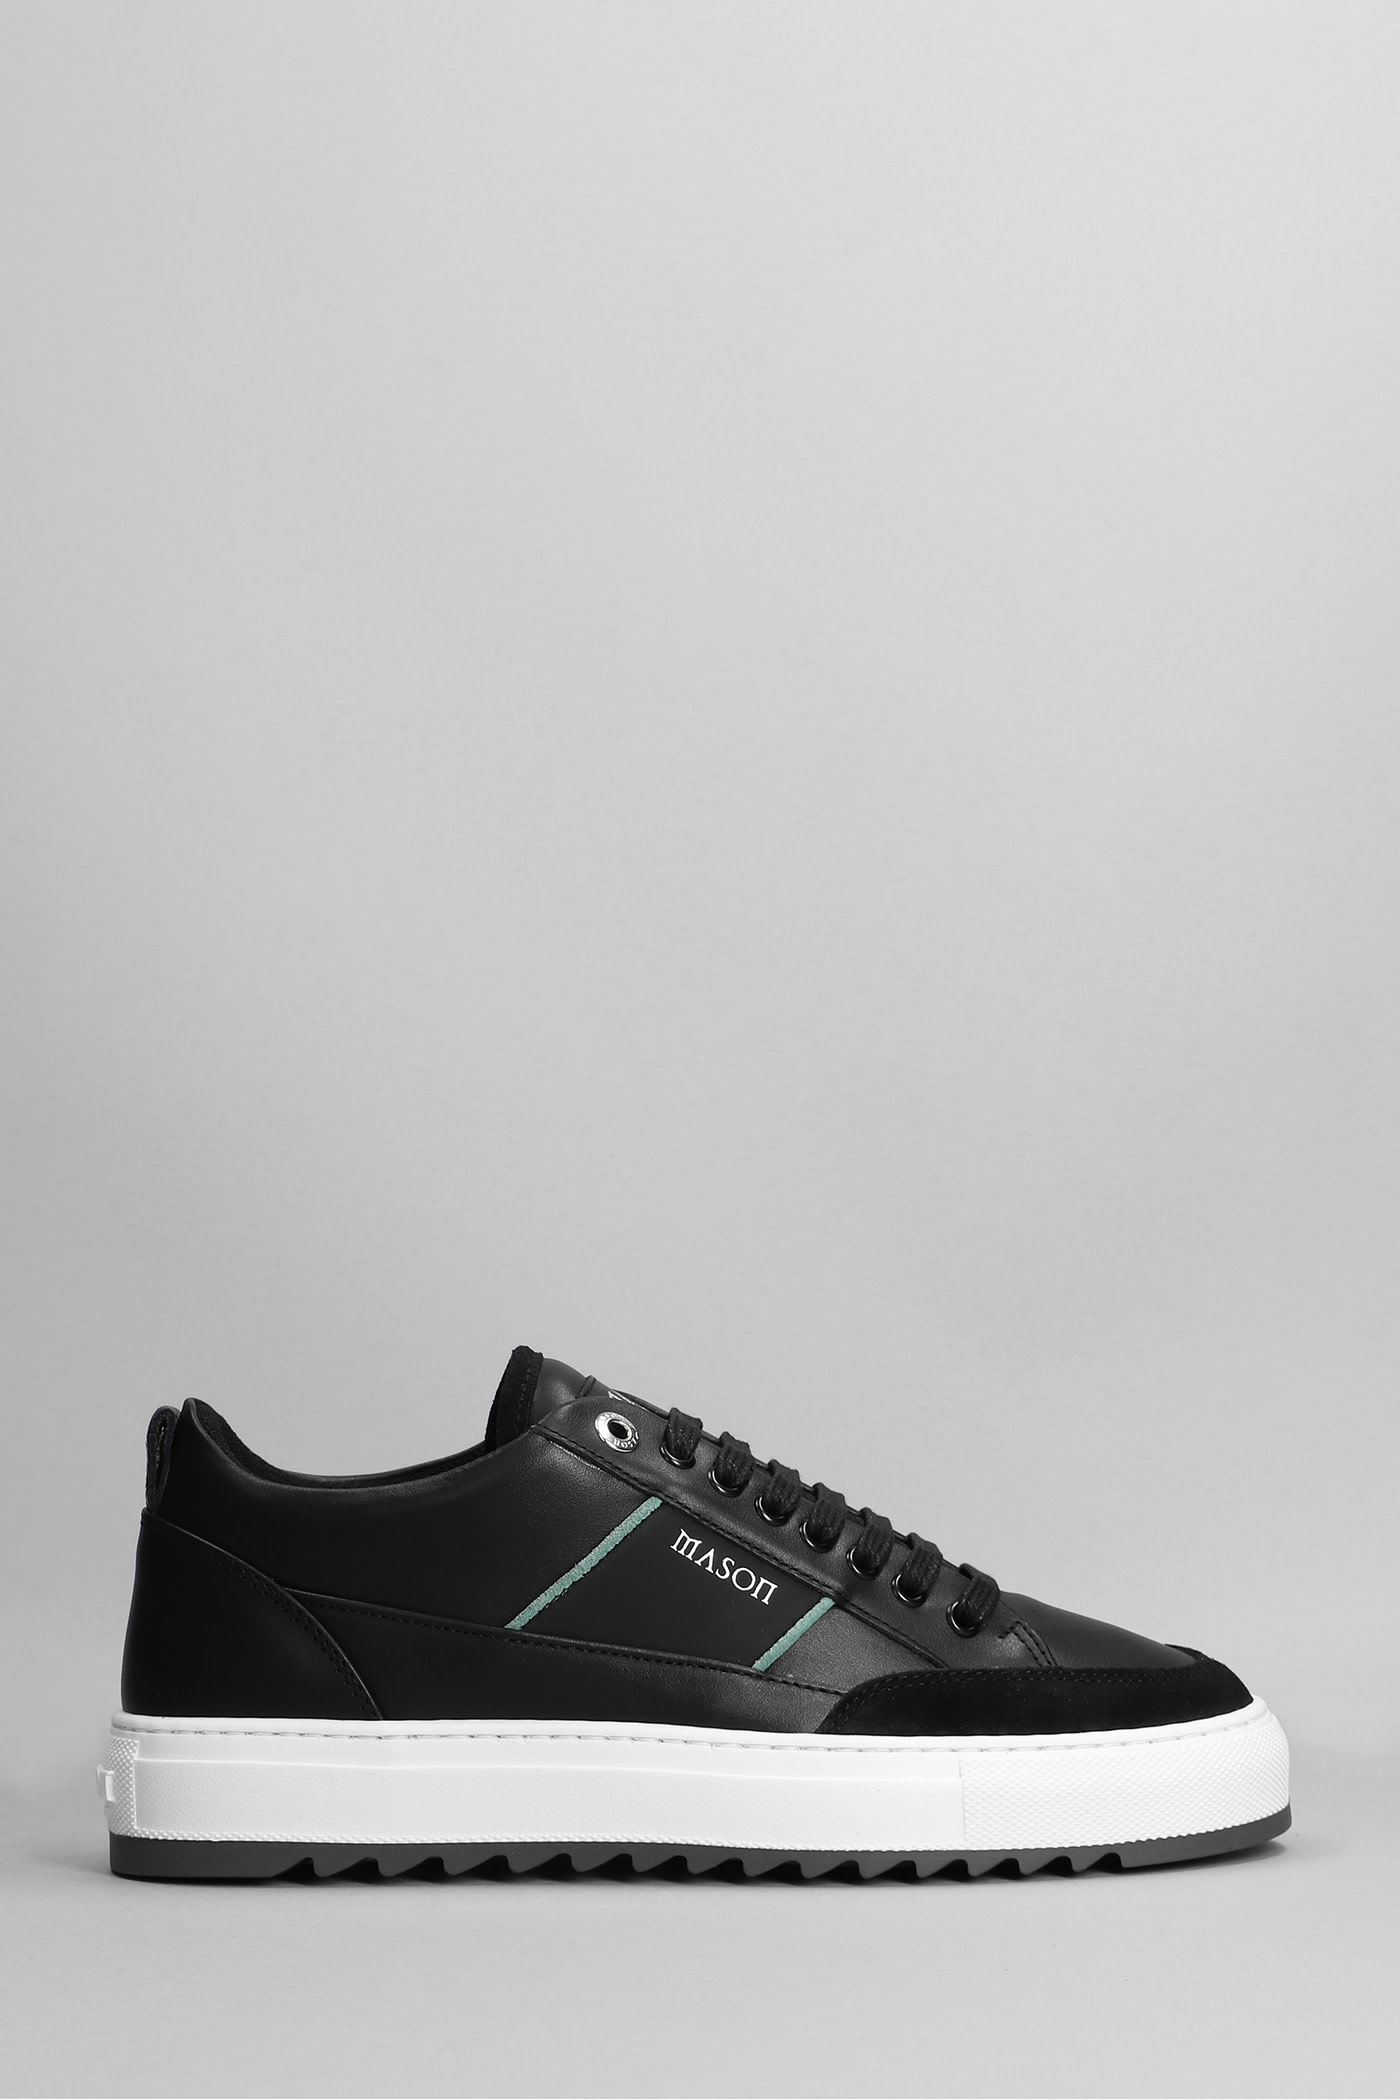 Mason Garments Tia Sneakers In Black Leather